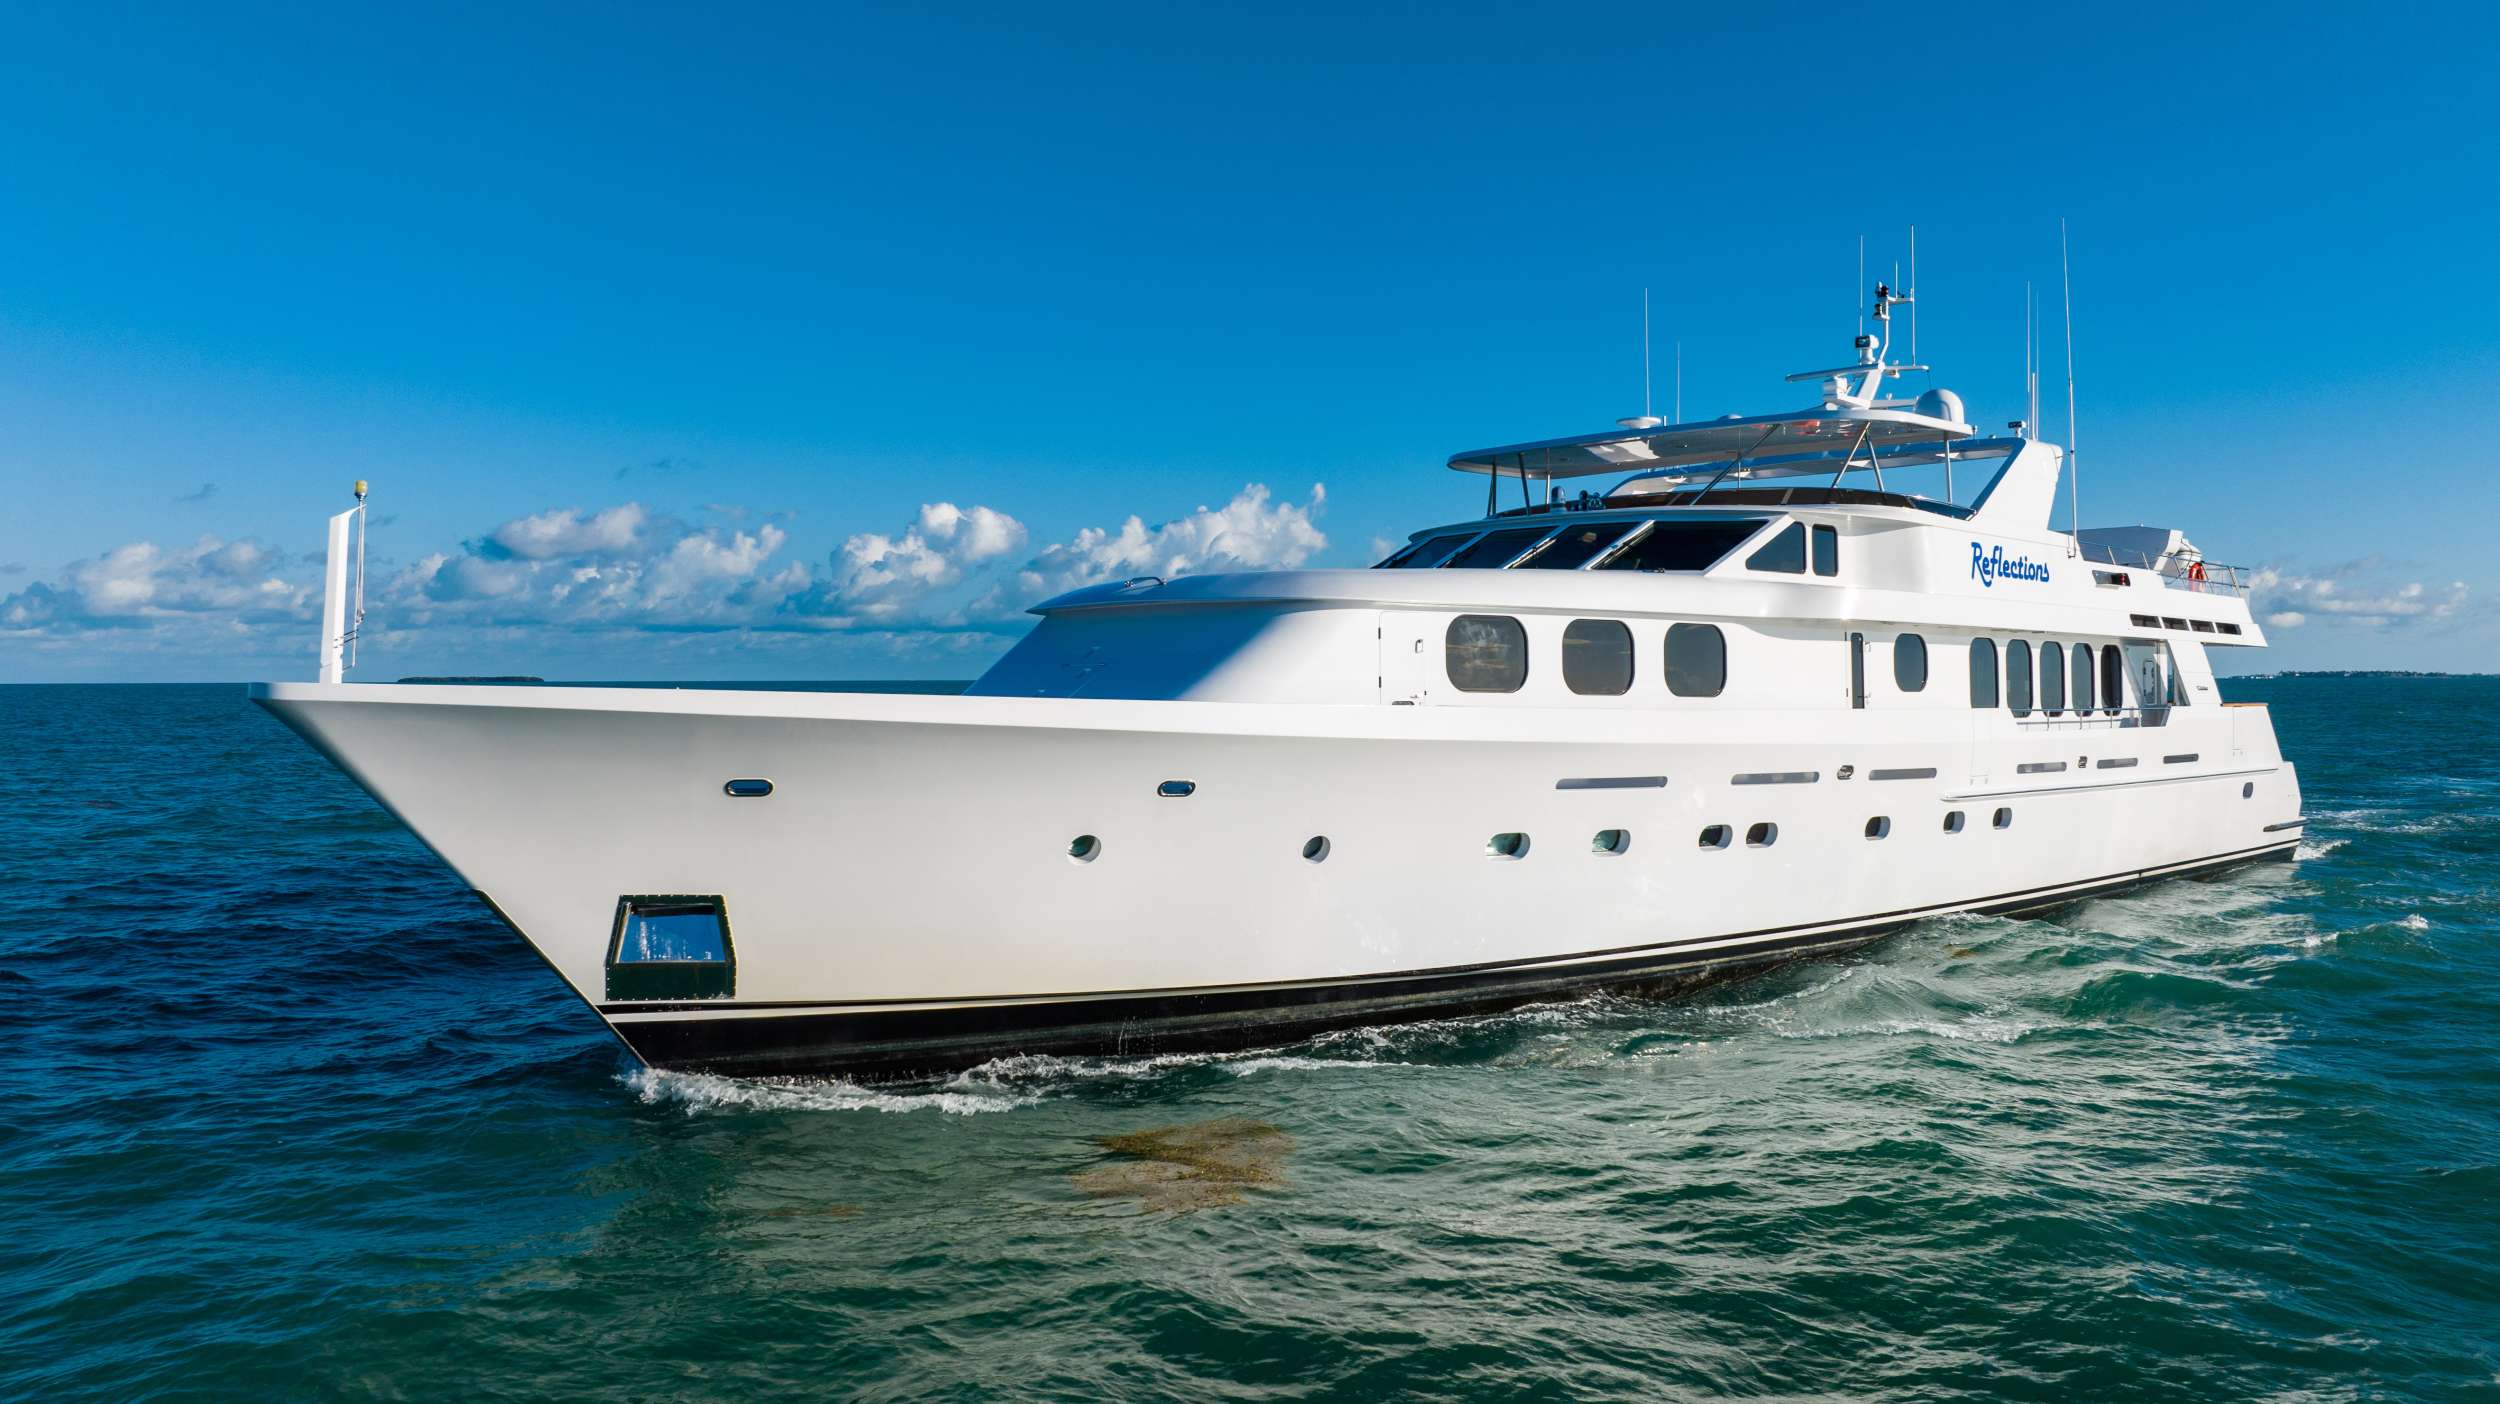 Reflections Luxury Crewed Christensen 124 Motoryacht Discount Cruising the Bahamas.